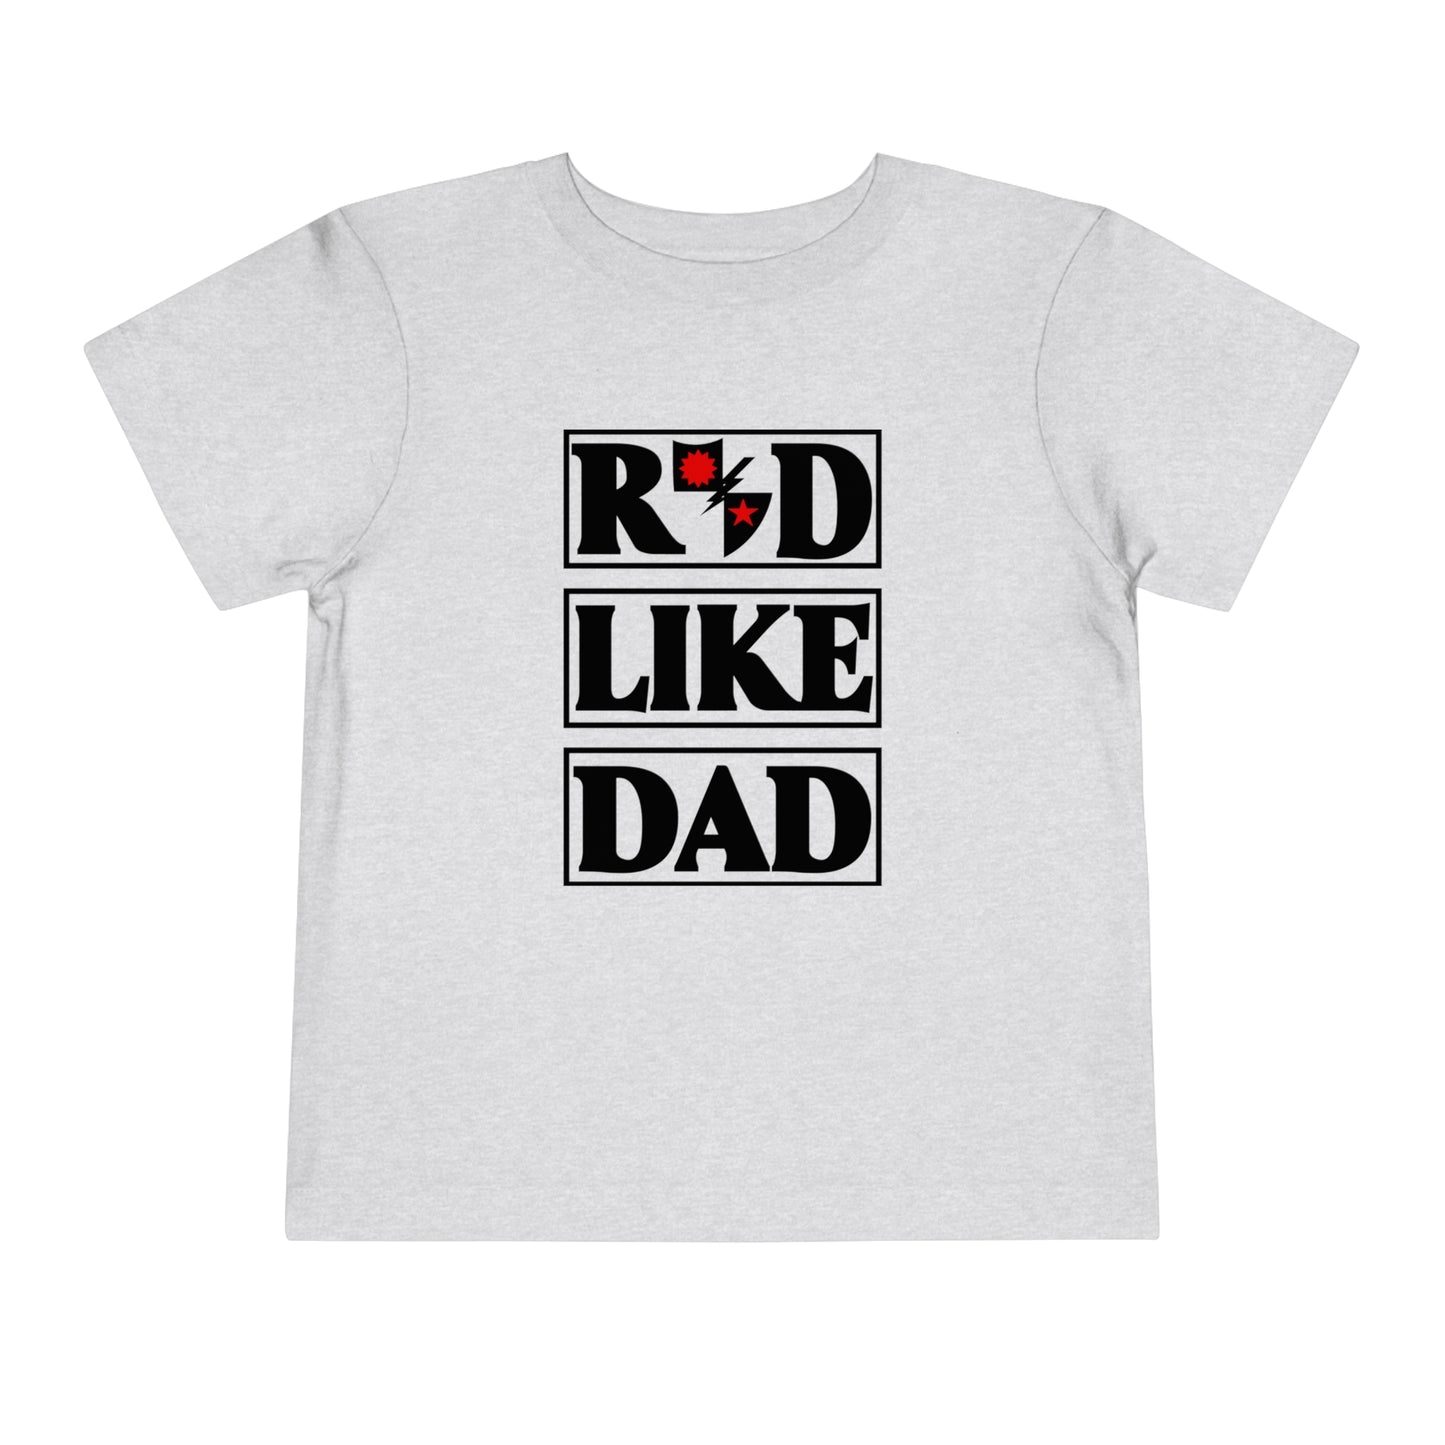 Rad Like Dad Toddler Short Sleeve Tee (2-5T)